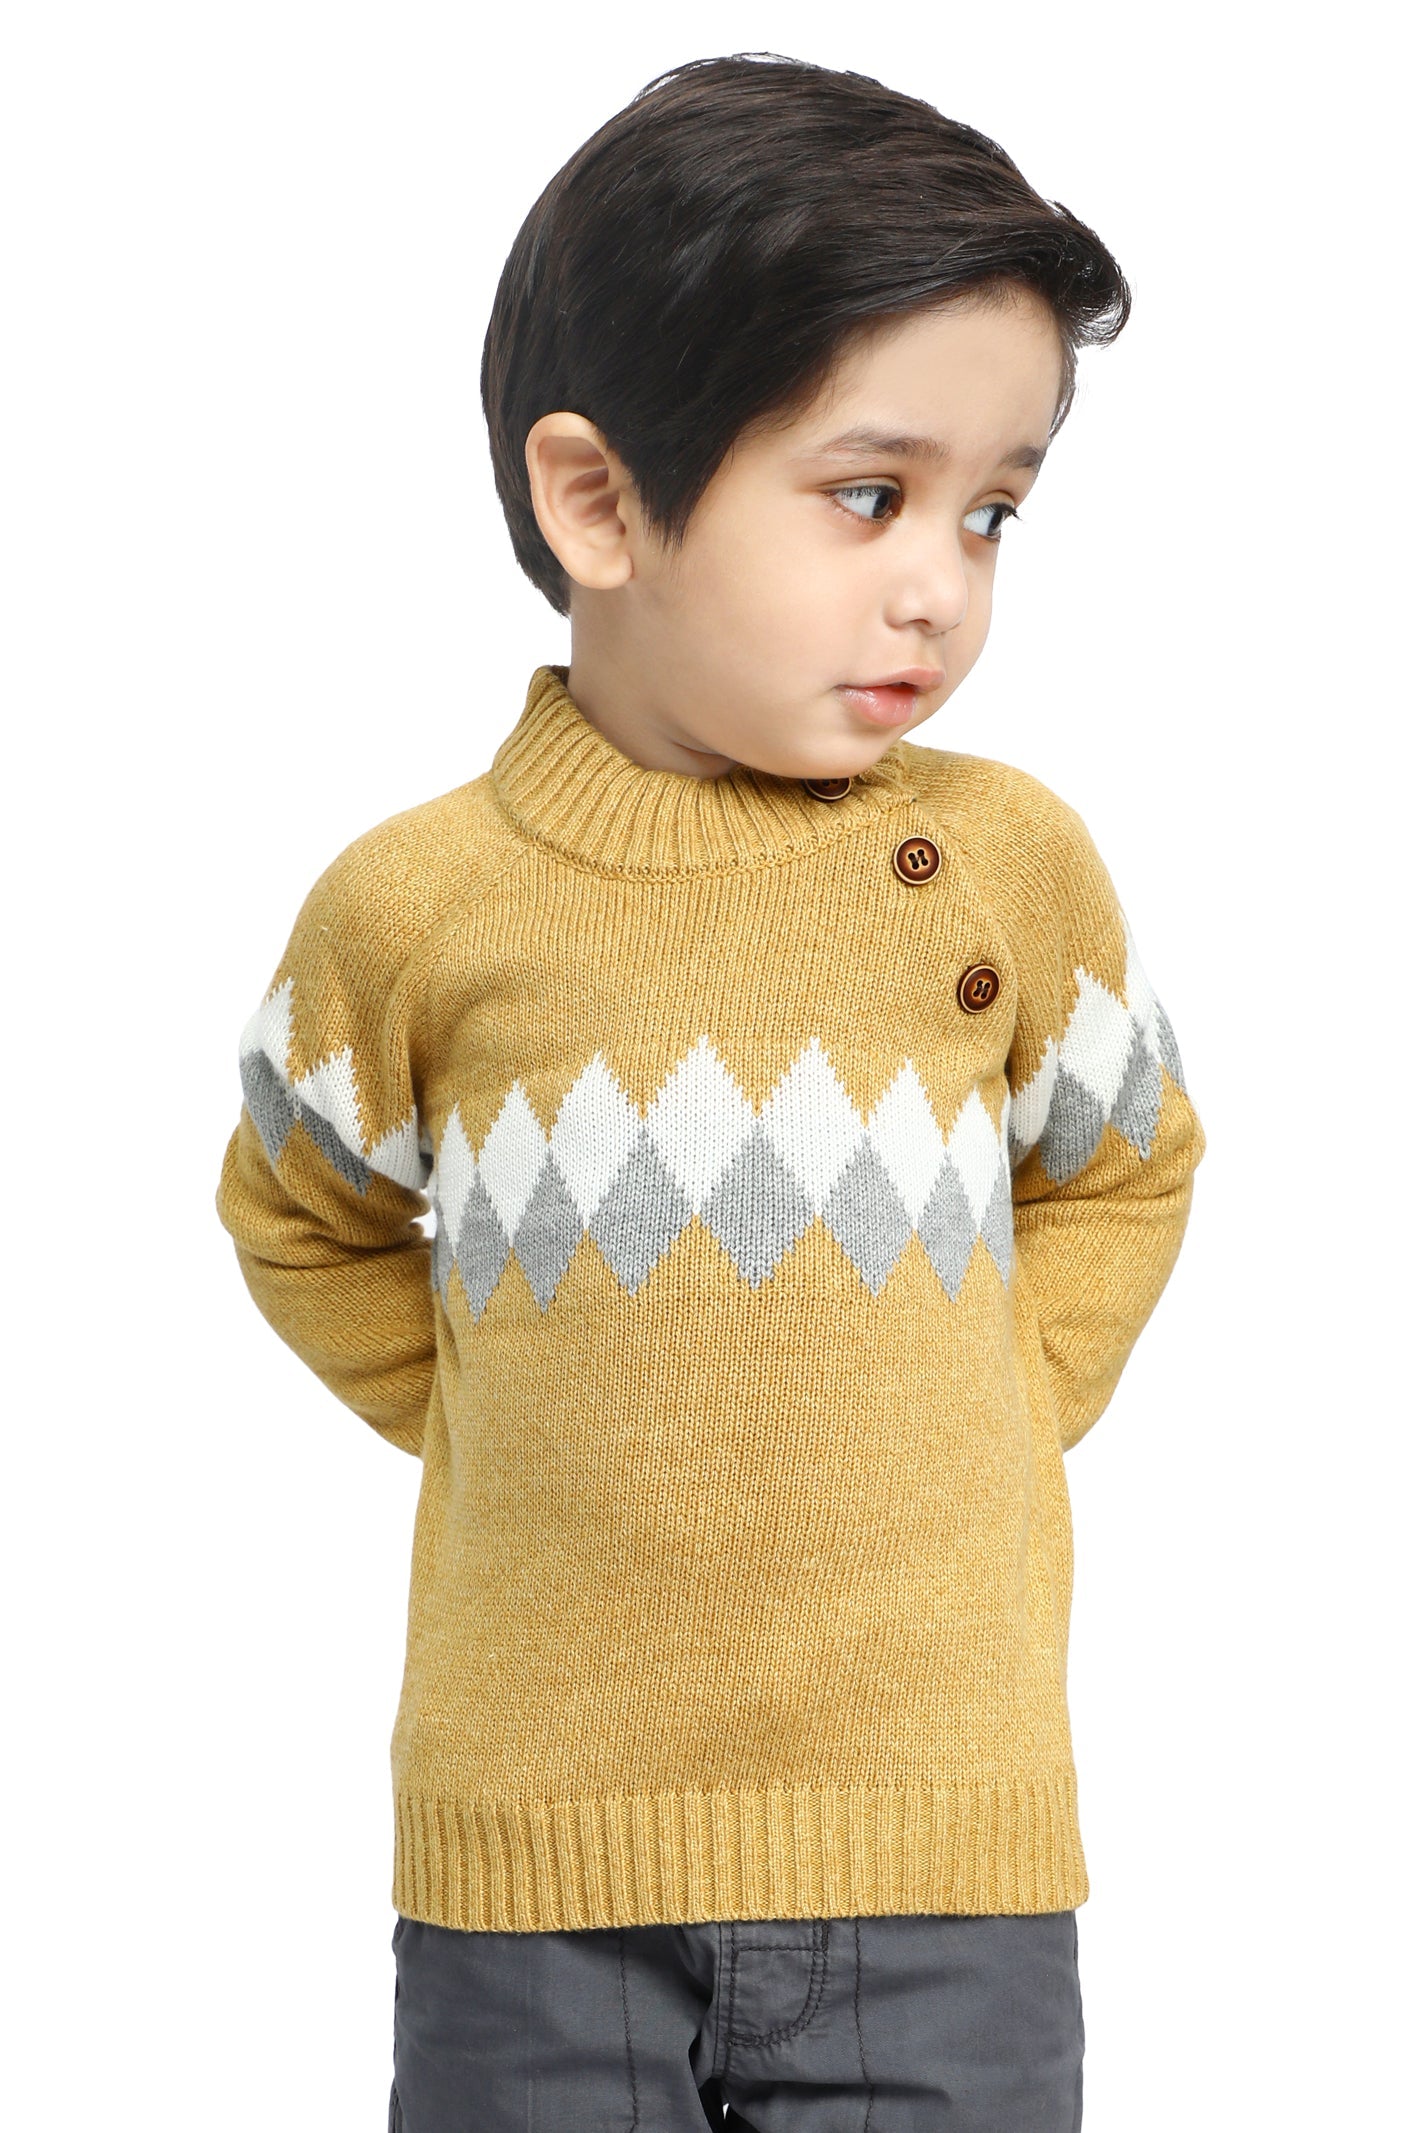 Boys Toddler Sweater In Beige SKU: IBE-0002-BEIGE - Diners